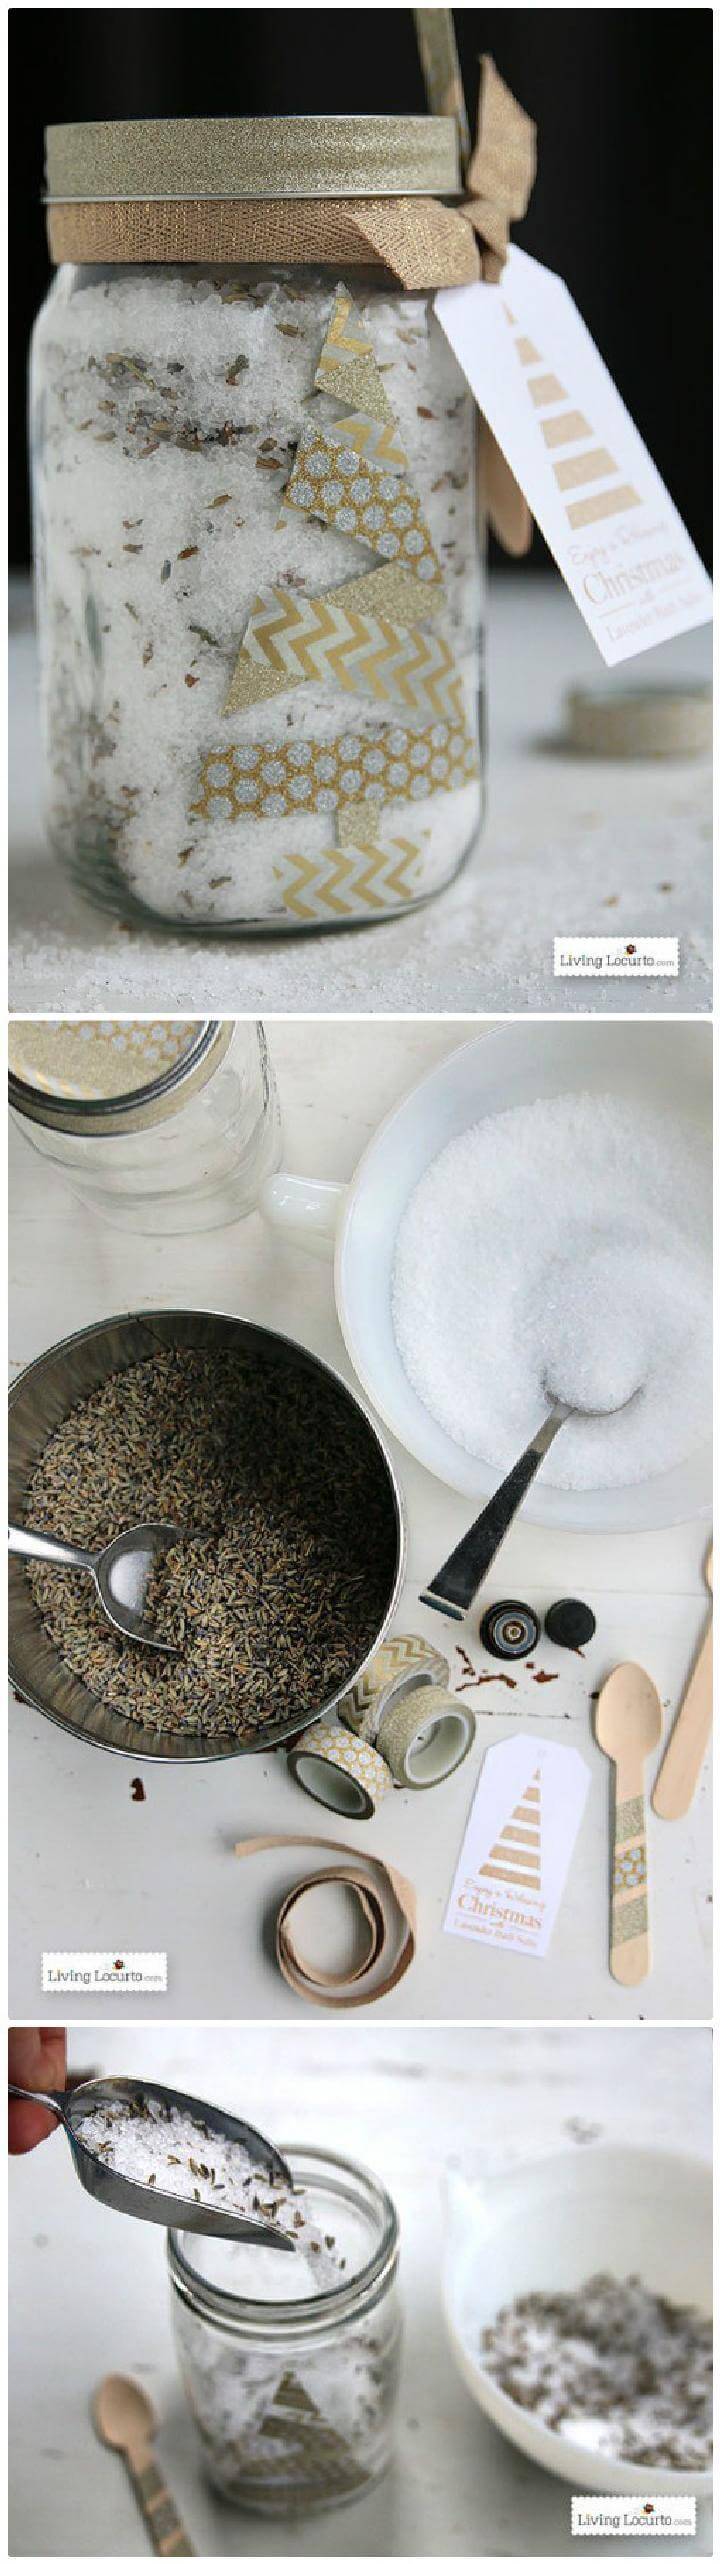 DIY Lavender Bath Salt Gift